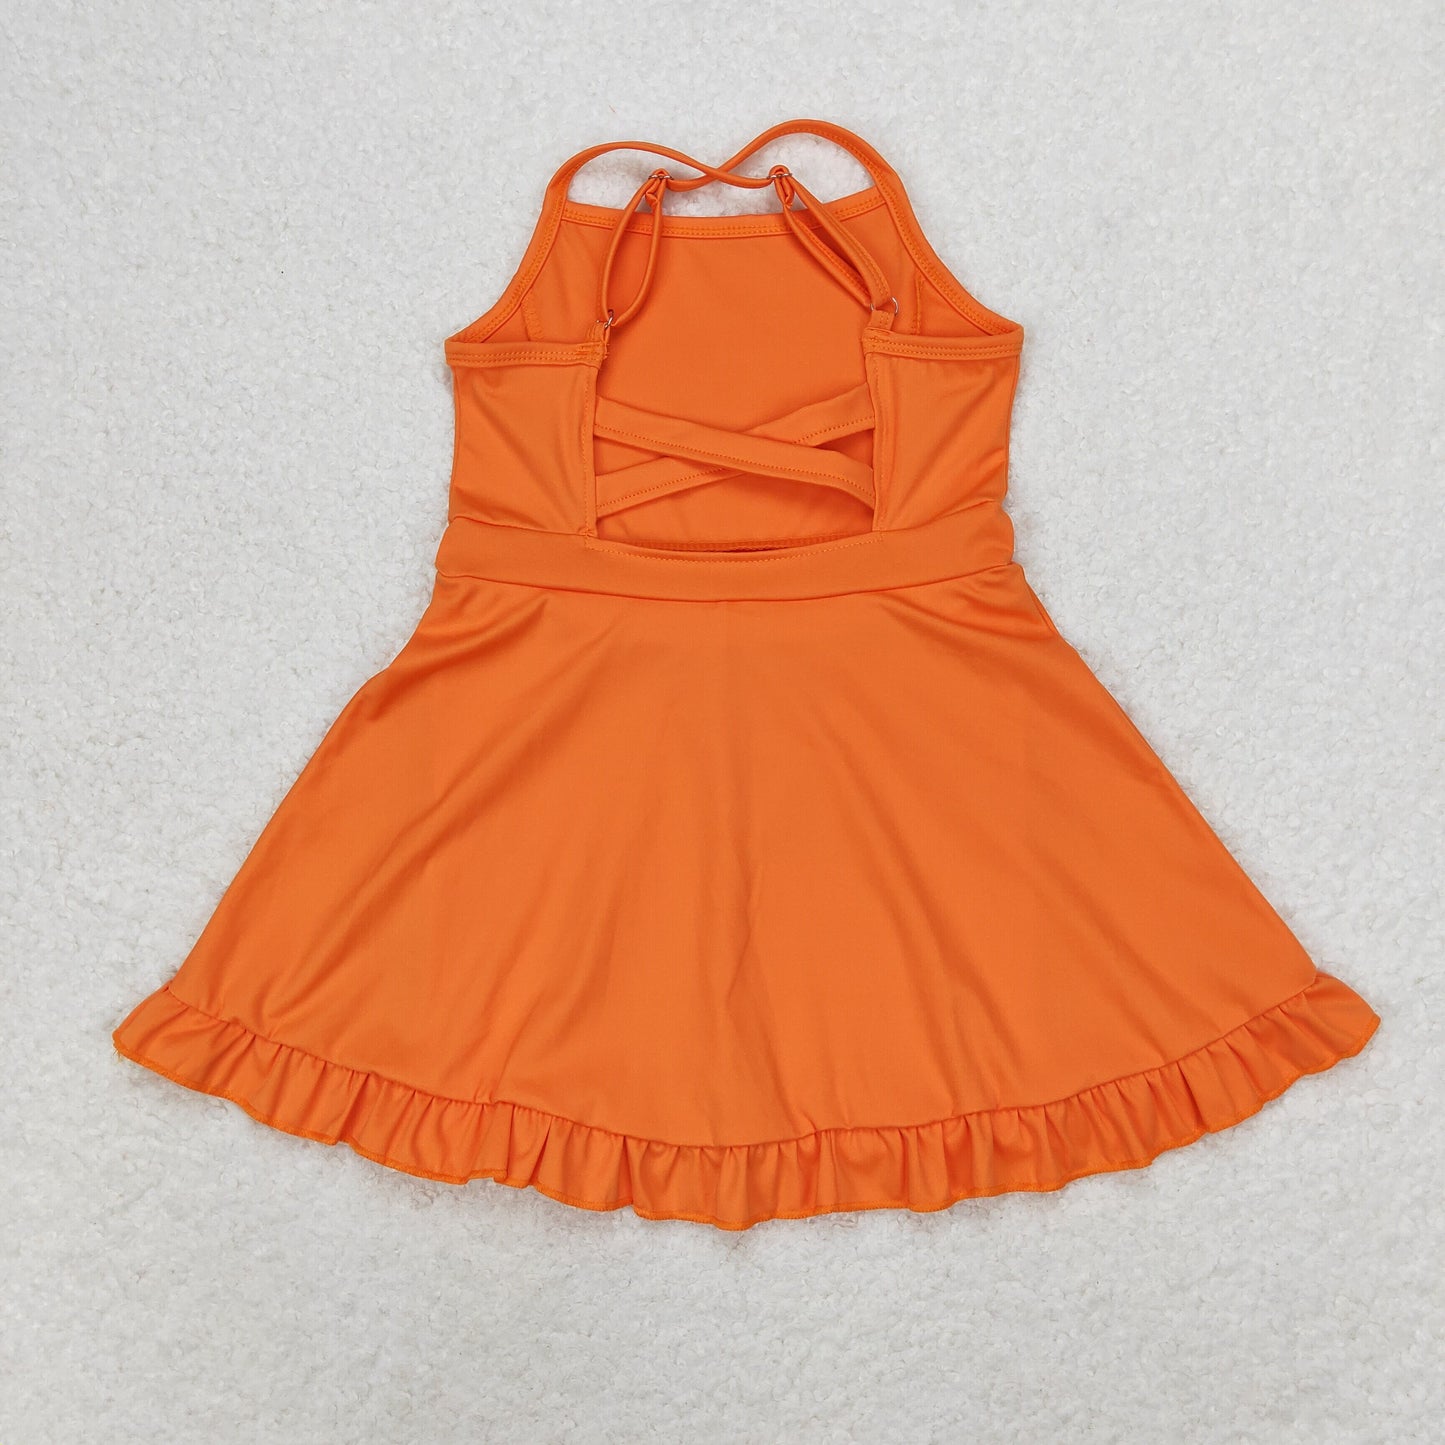 rts no moq S0442 solid orange sportswear skirt swimsuit